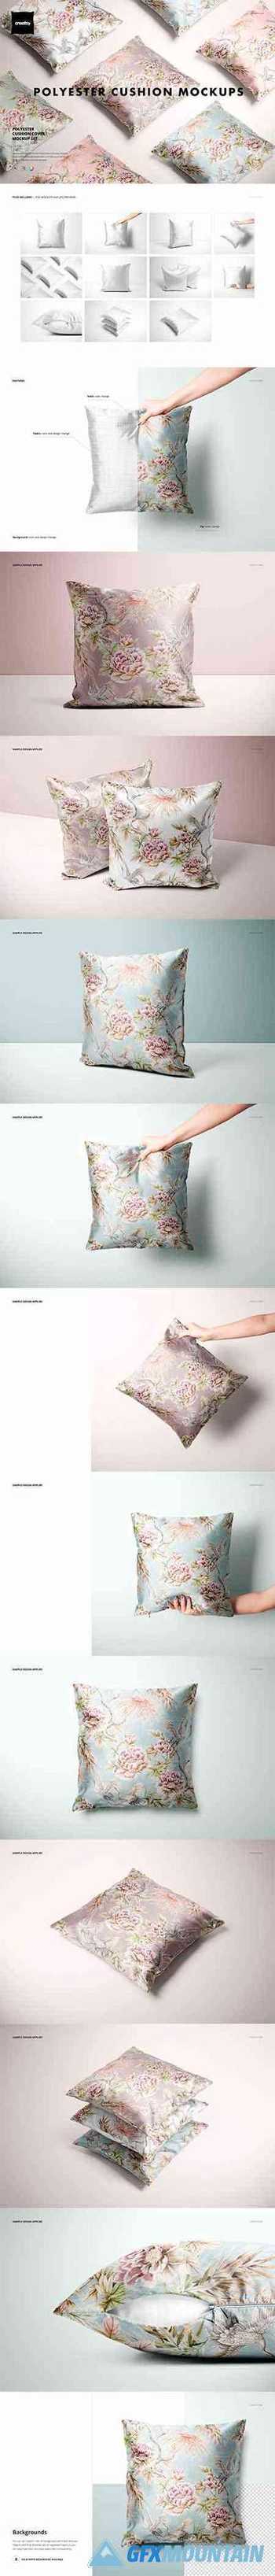 Polyester Cushion Cover Mockup Set 5729924